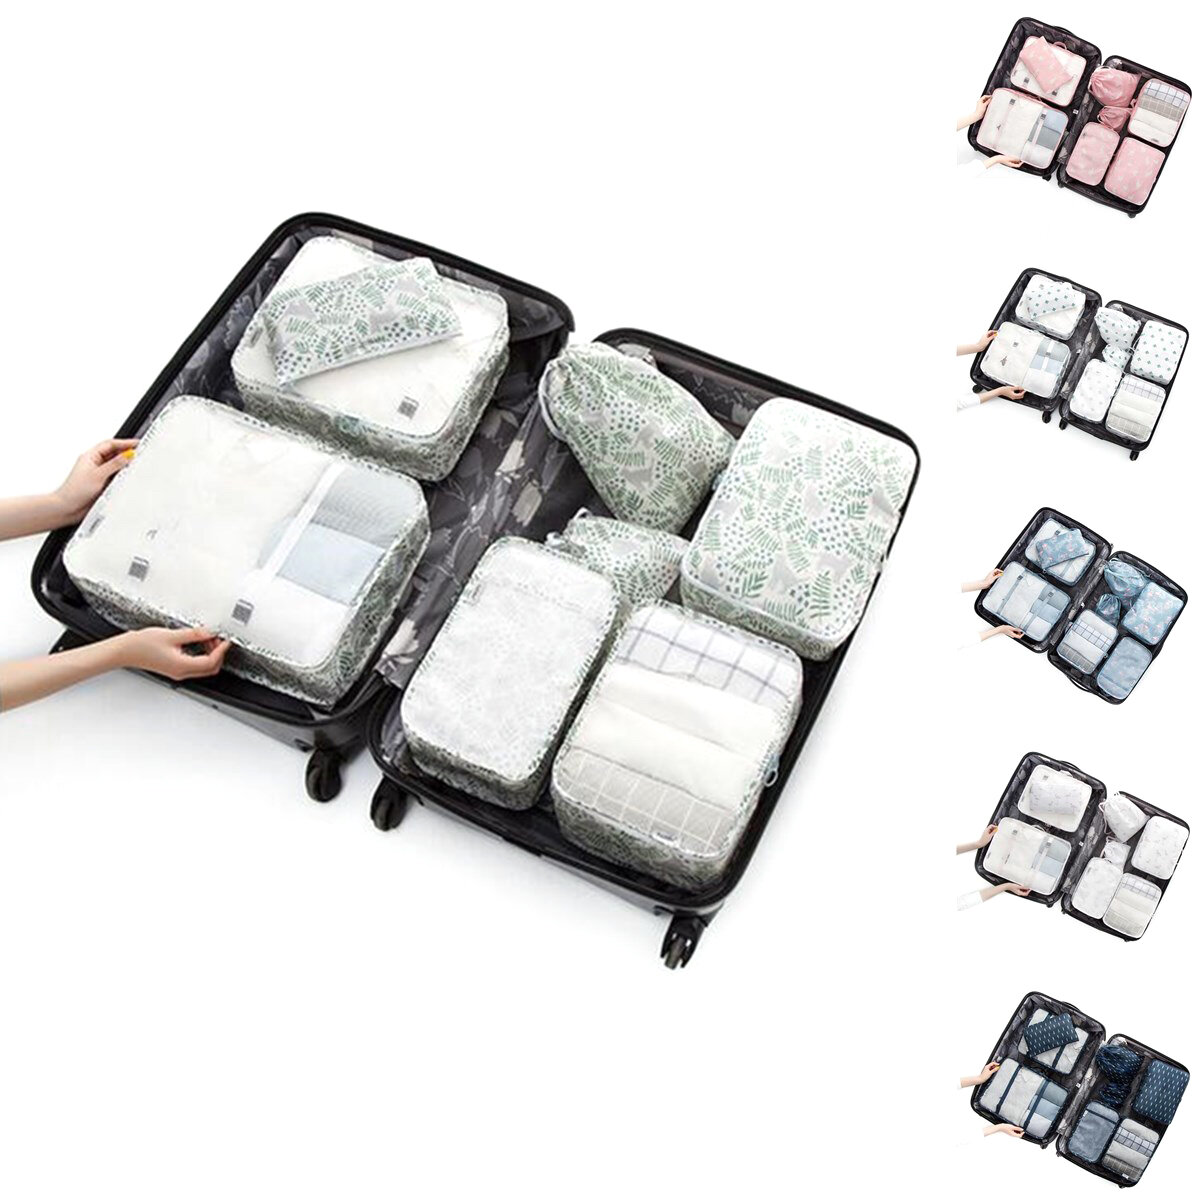 8PCS/Set Travel Luggage Organizer Storage Pouches Suitcase Packing Bags